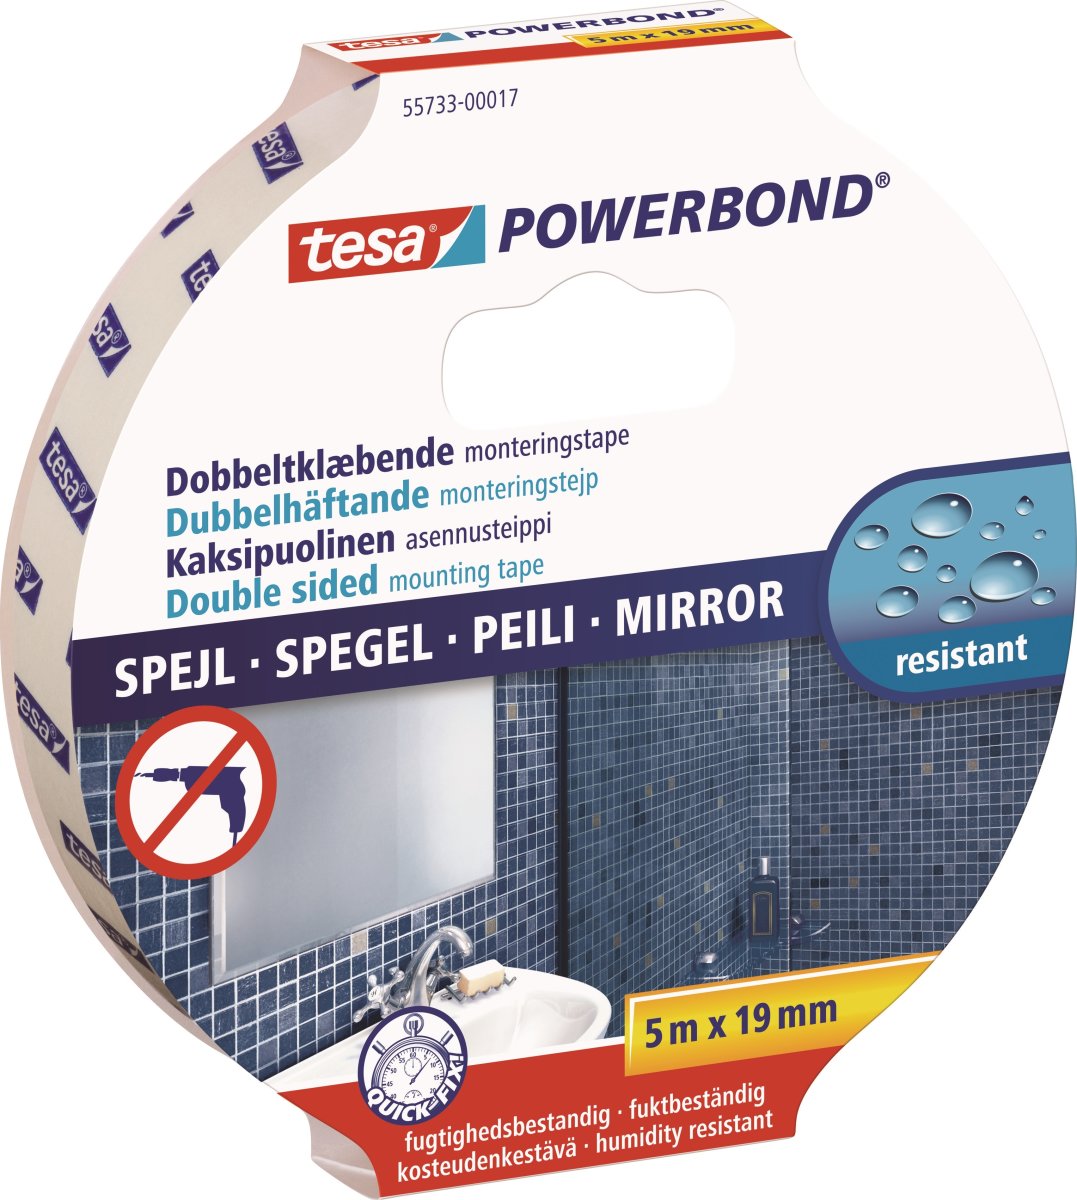 tesa Powerbond Mirror Monteringstape | 19mm x 5m